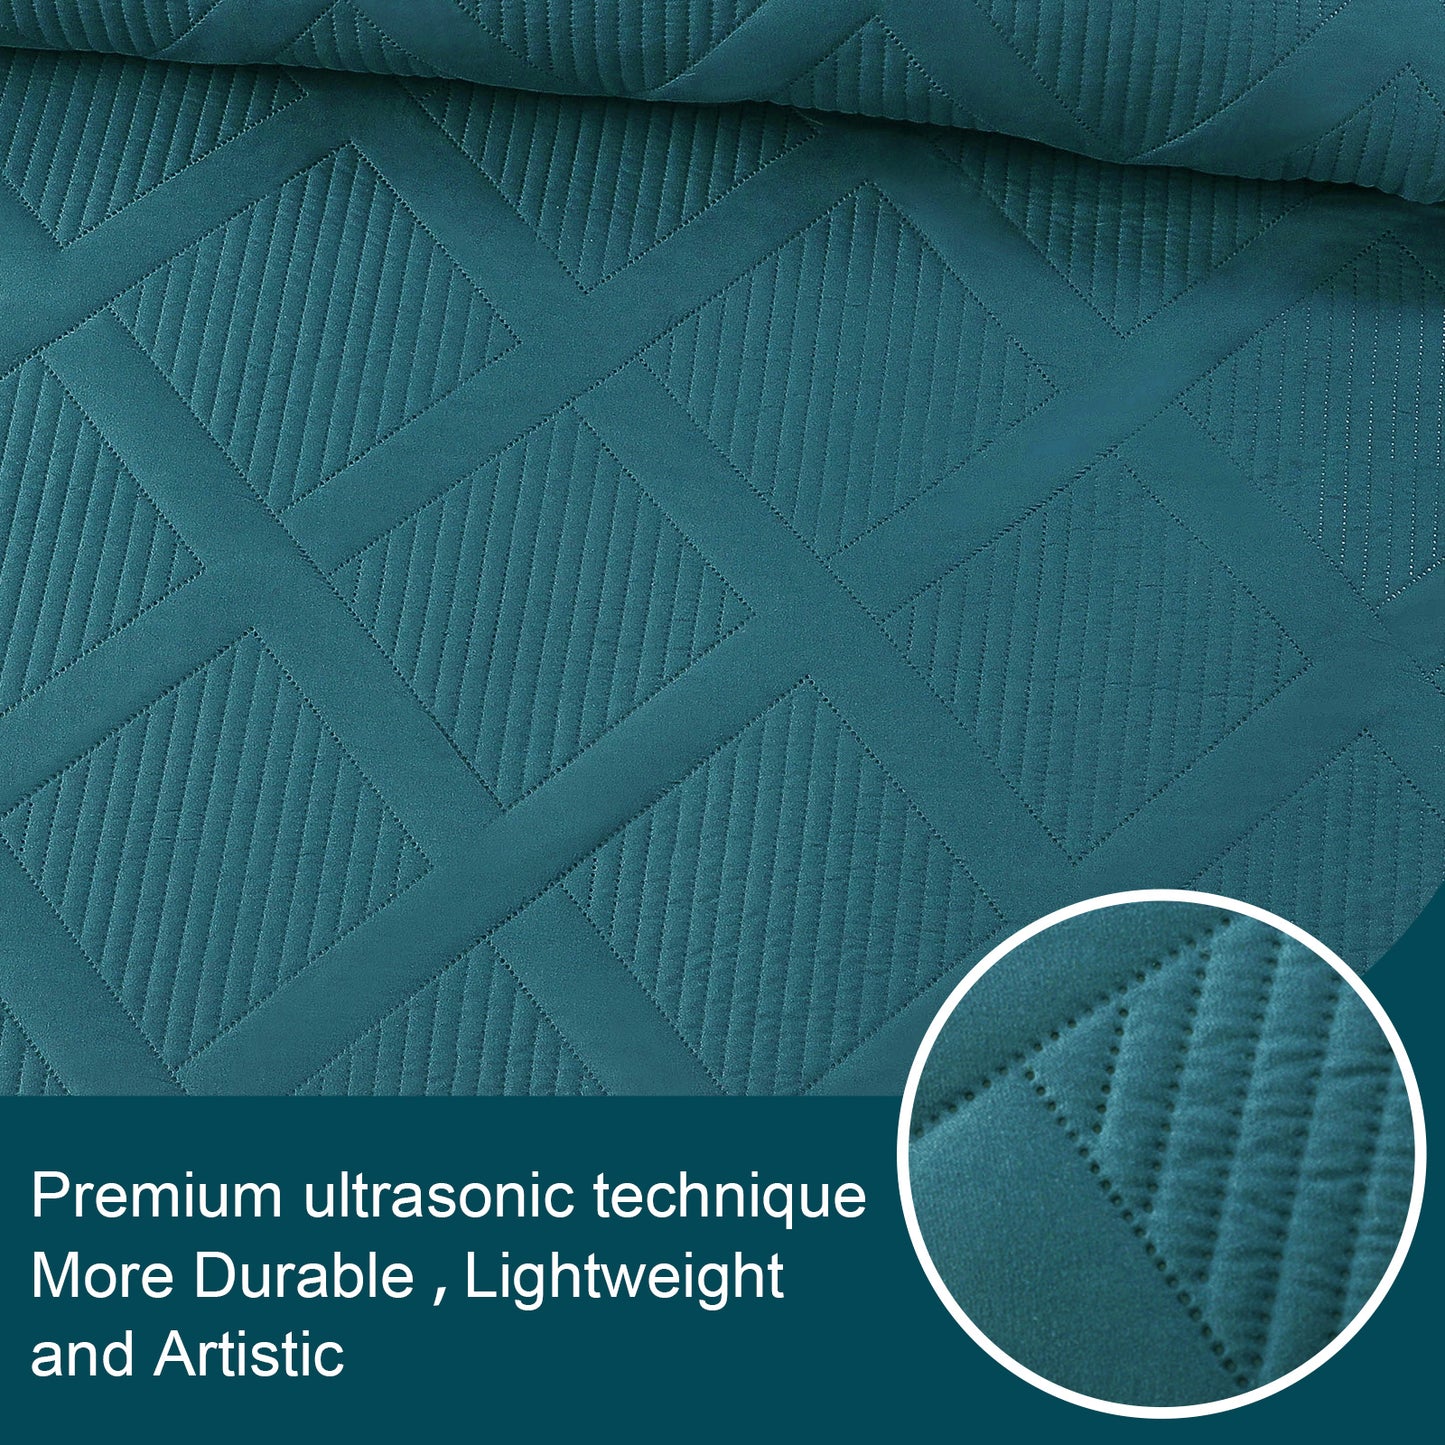 Exclusivo Mezcla Ultrasonic Twin/ Twin XL Quilt Set, Lightweight Bedspreads Modern Striped Coverlet with 1 Pillow Sham, Teal